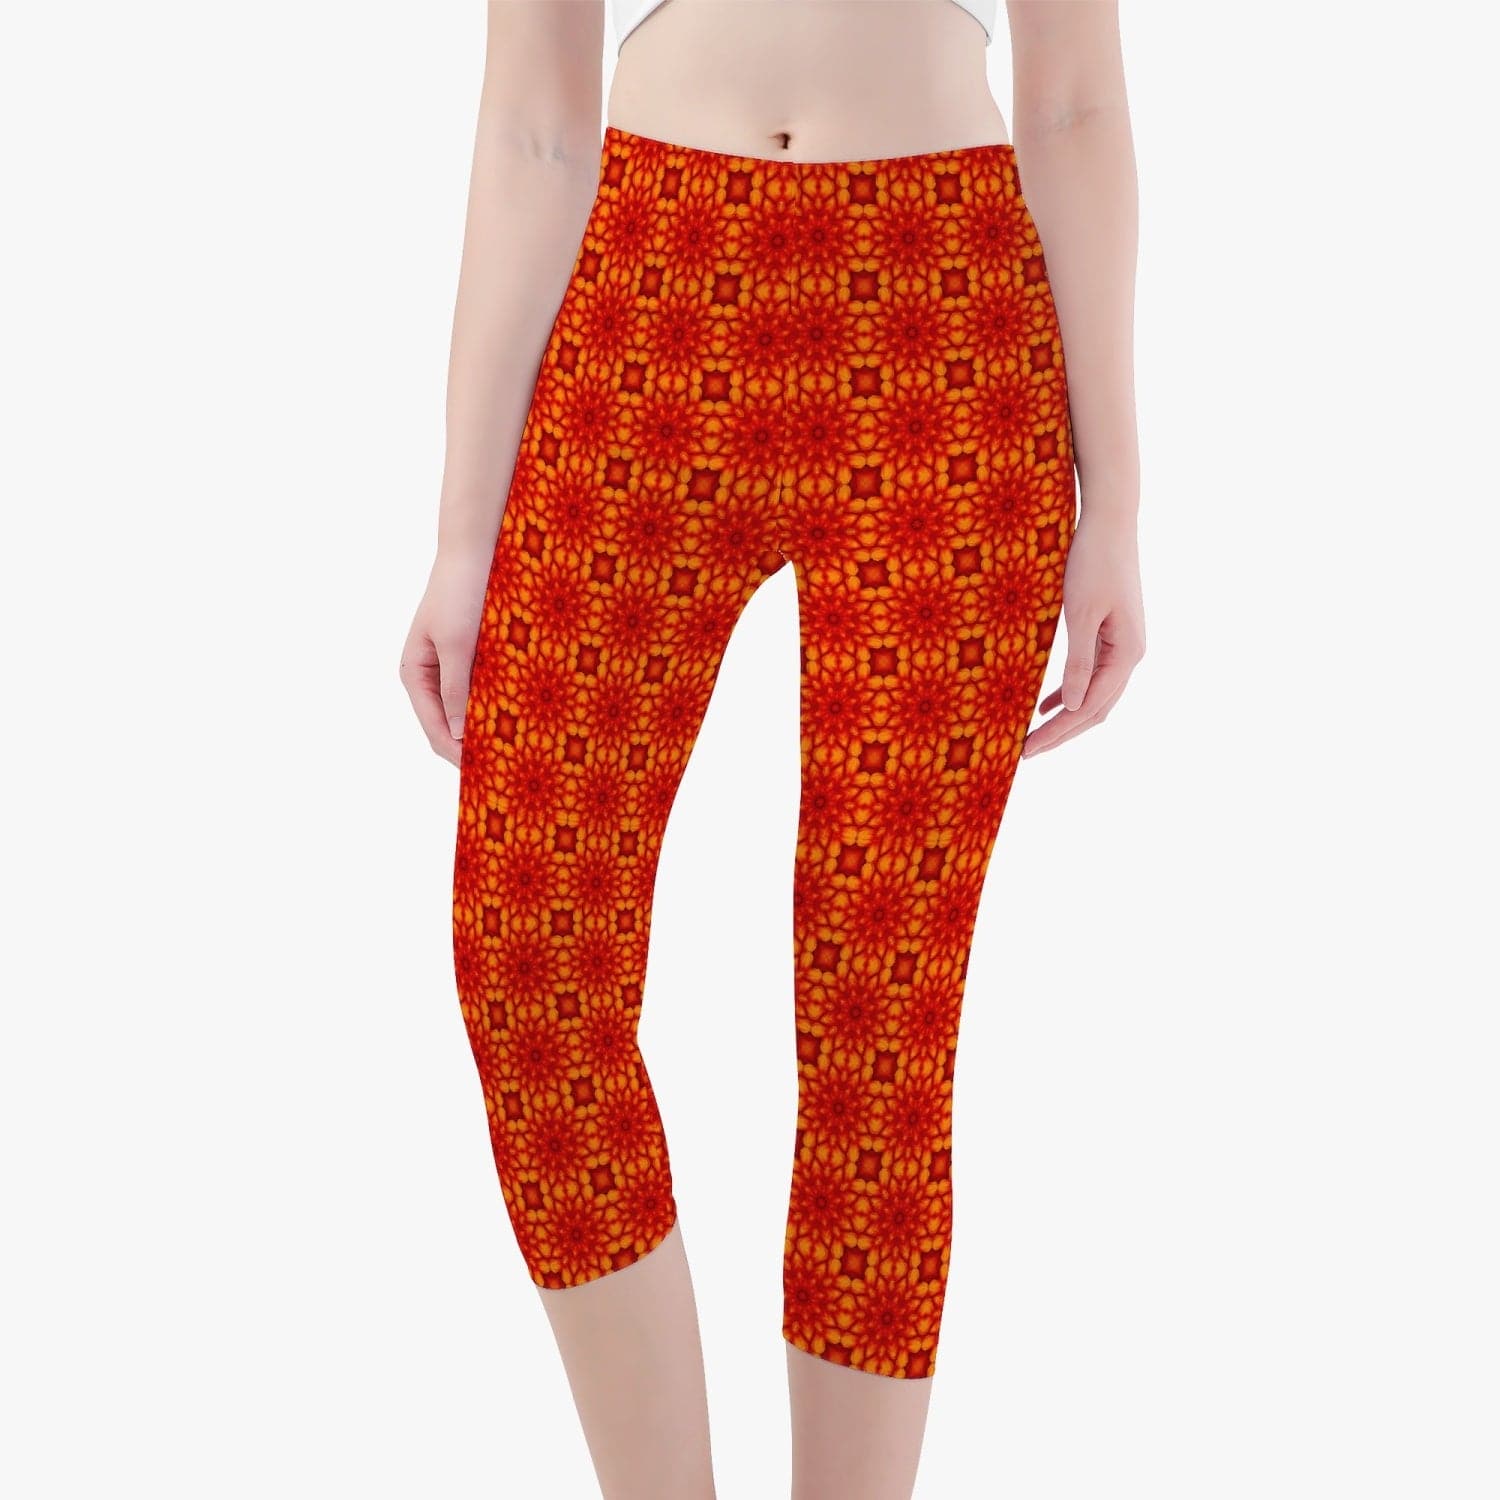 Orange Sacral Chacra  Short Type Yoga Pants, by Sensus Studio Design